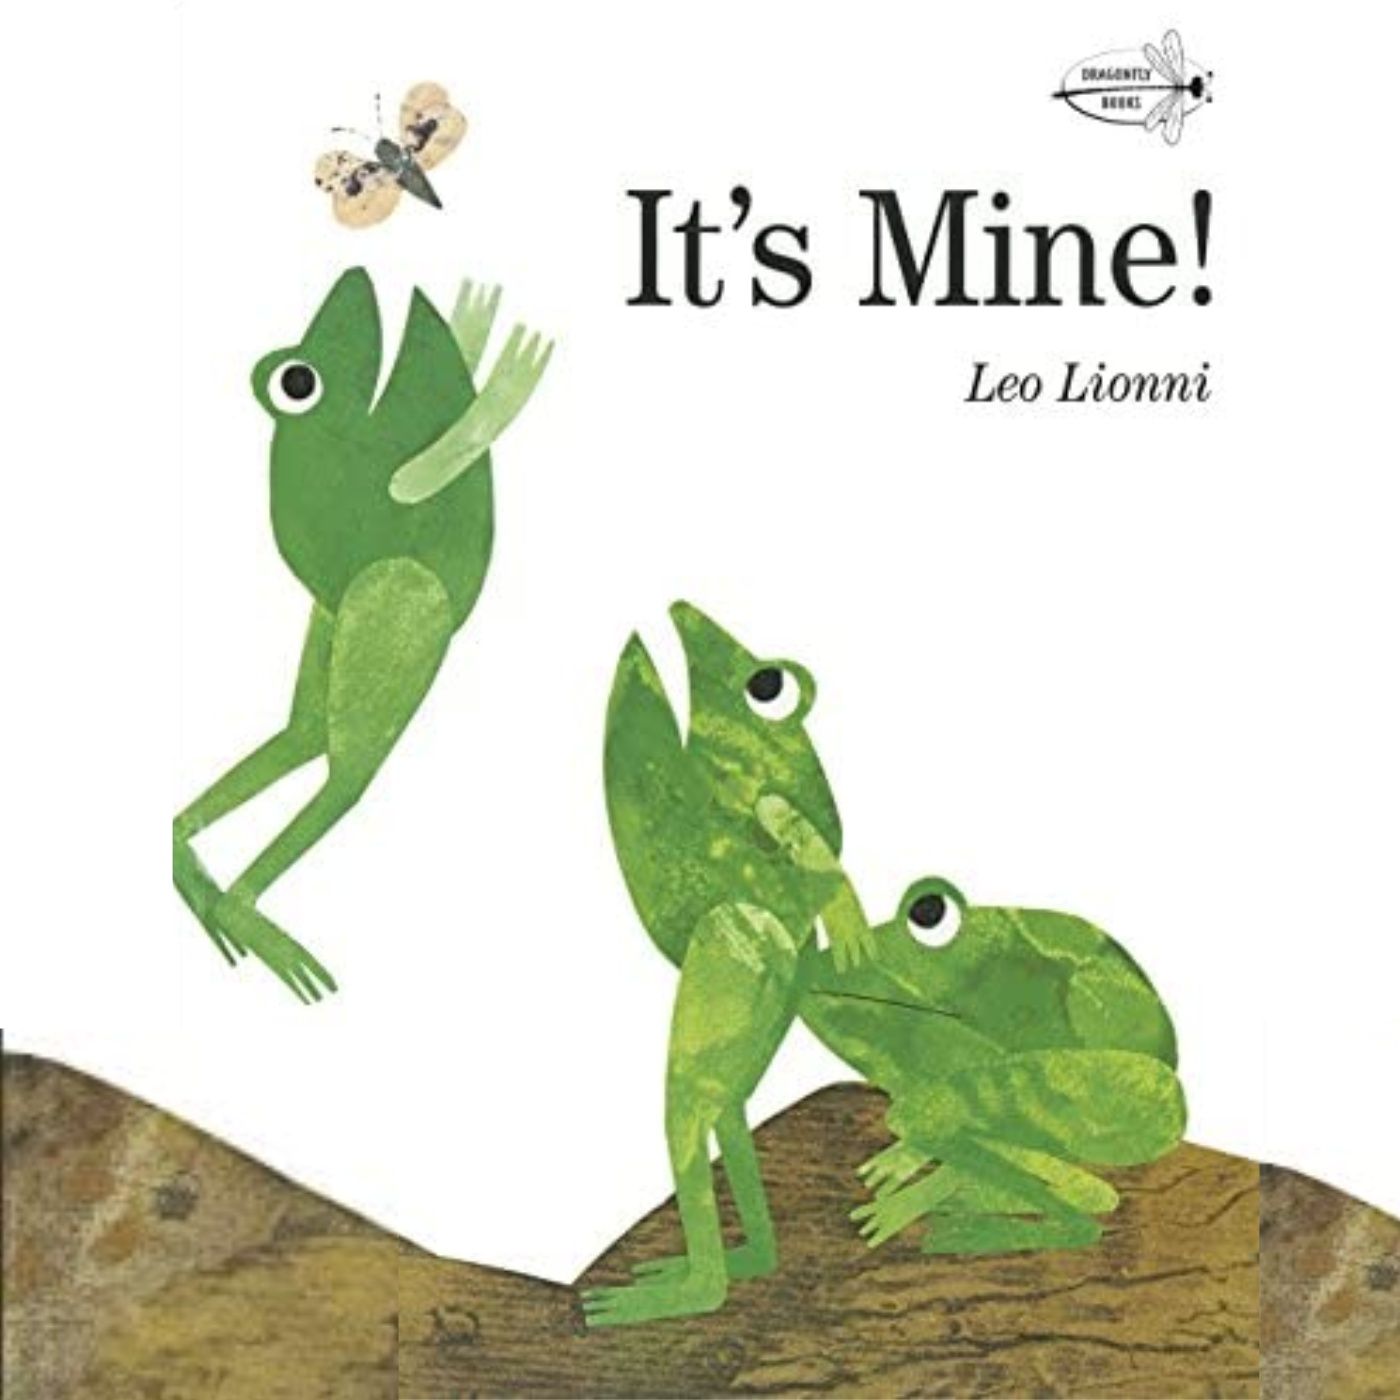 It's Mine by Leo Lionni - Read by Martyn Kenneth